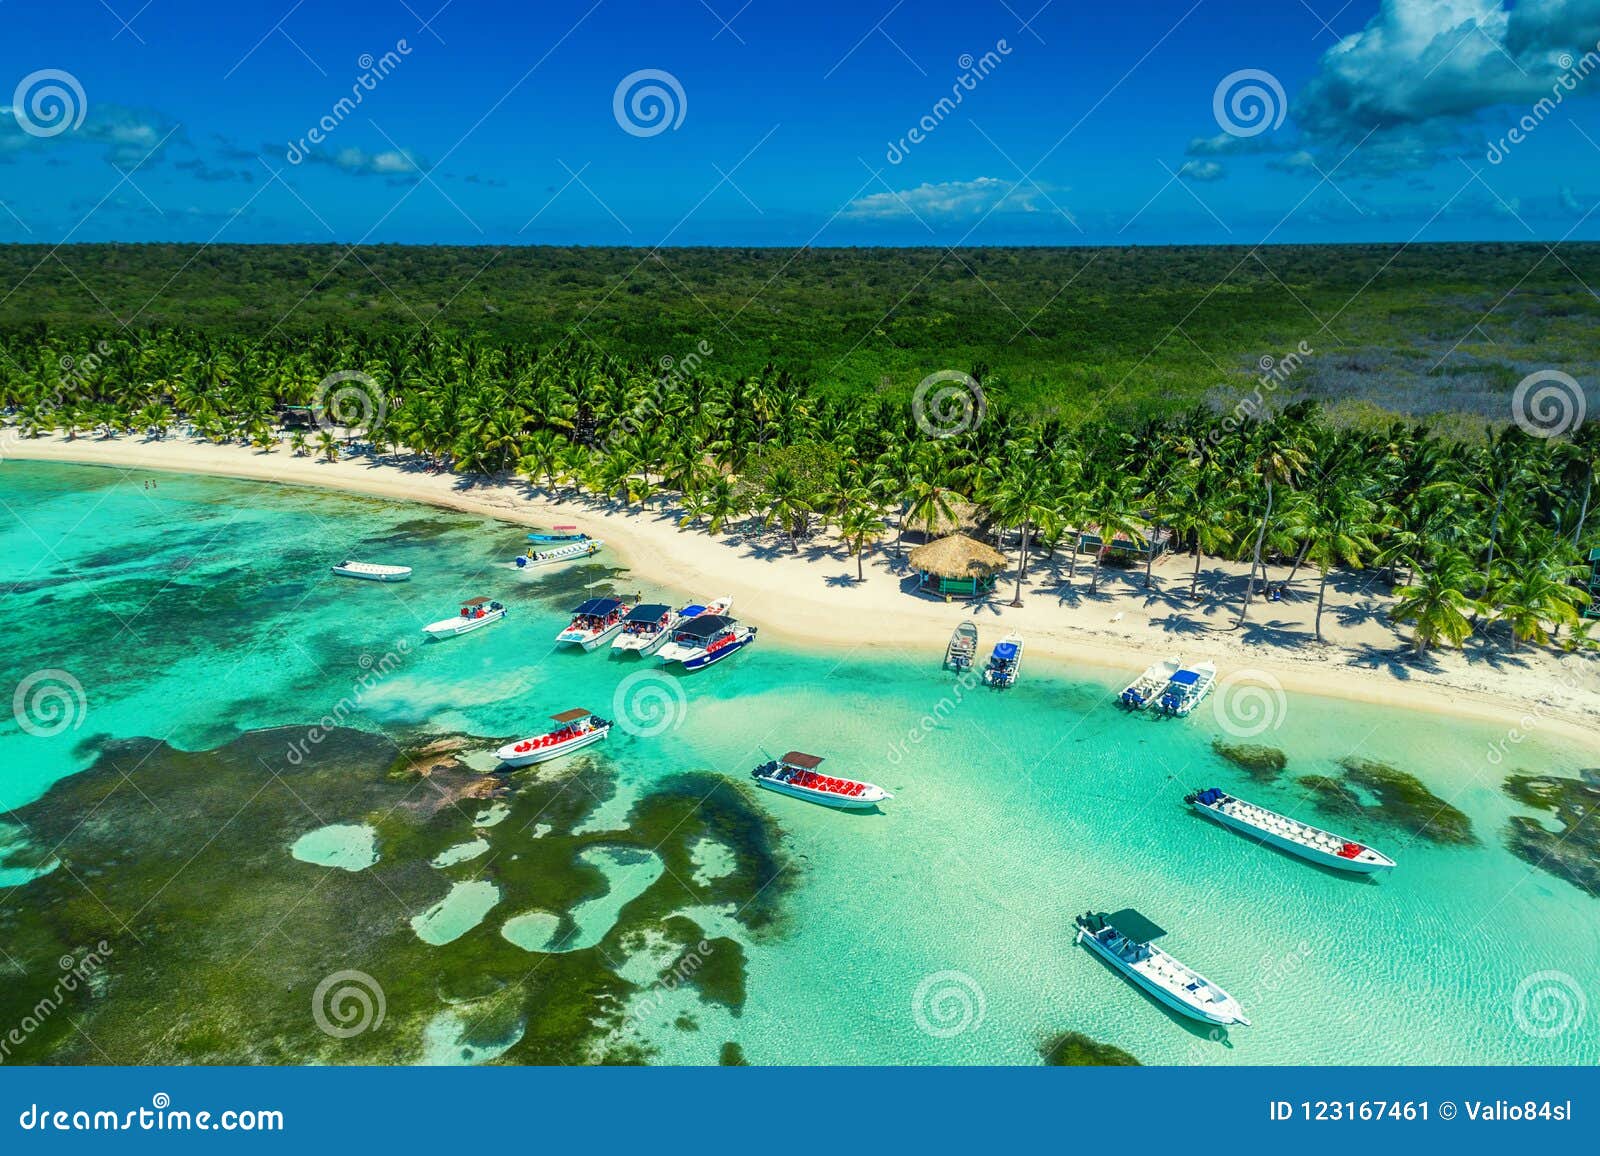 aerial view of tropical beach, dominican republic